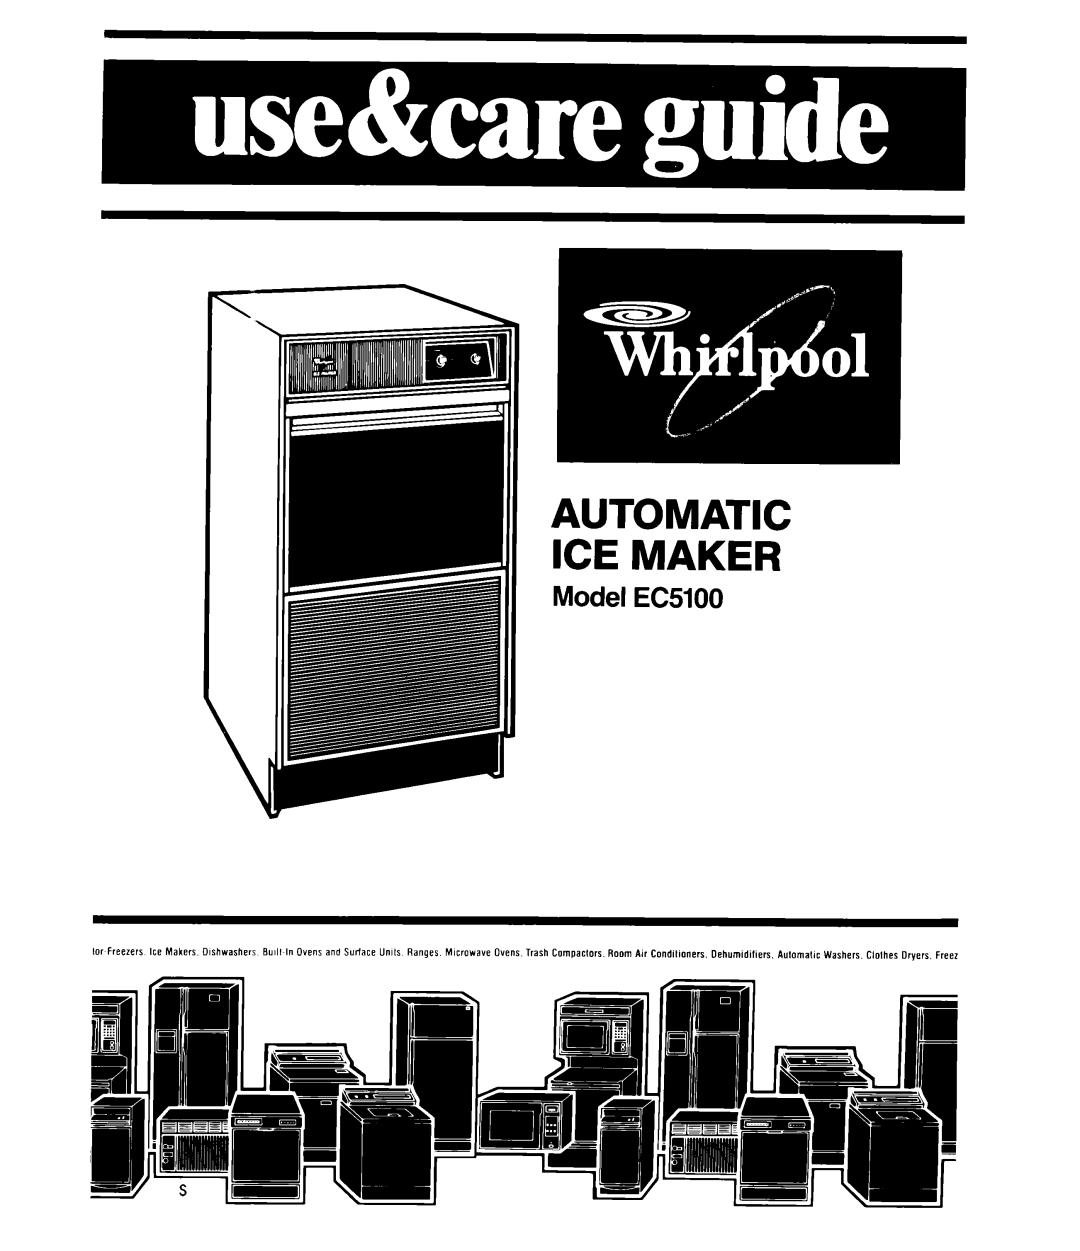 Whirlpool manual Model EC5100, Automatic Ice Maker 